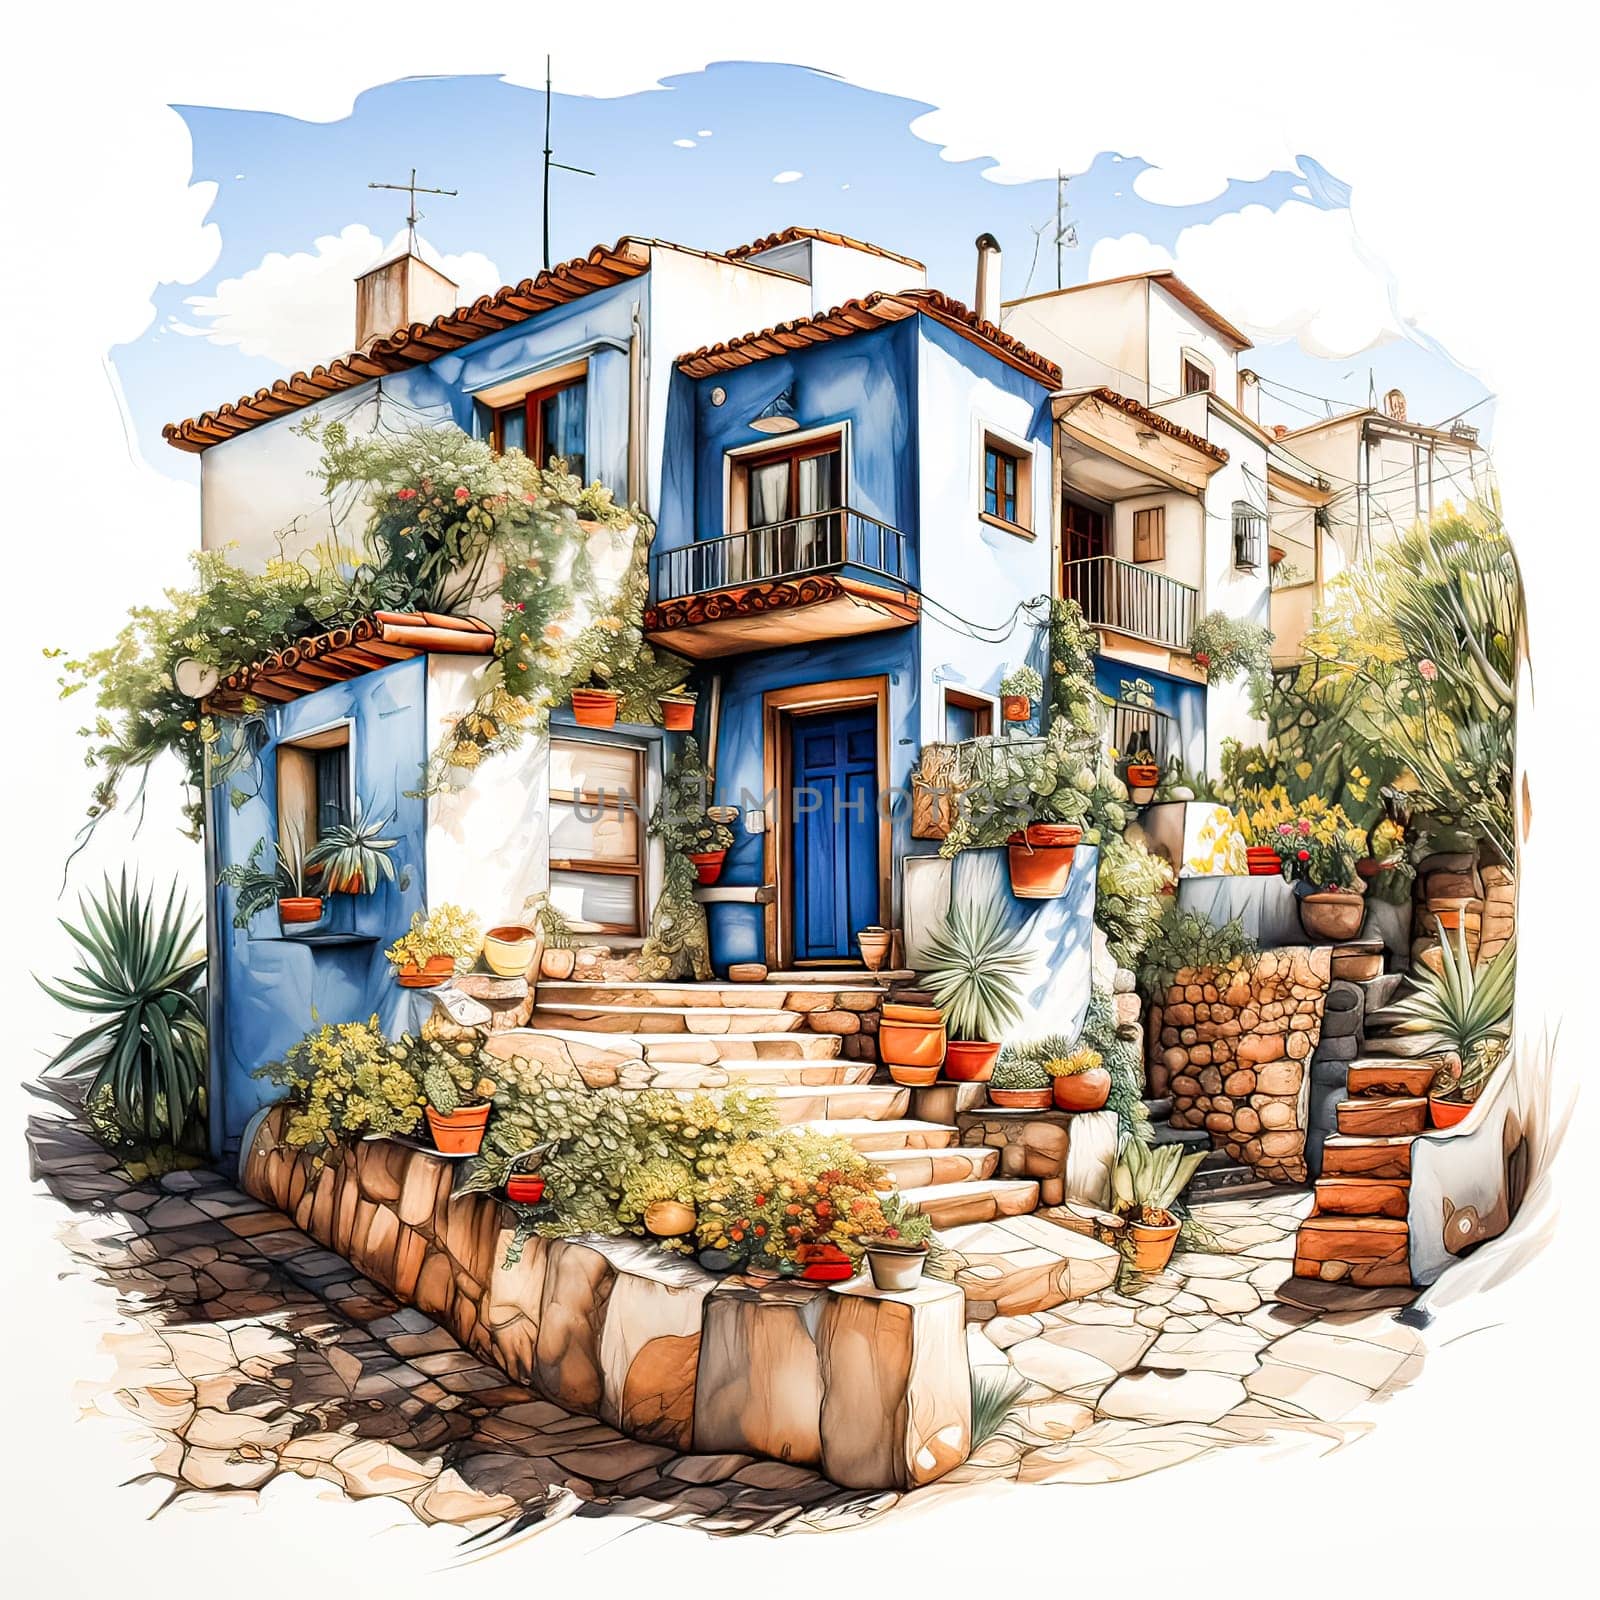 Sketch in watercolor liners captures a vivid, Spanish style interior design by Alla_Morozova93